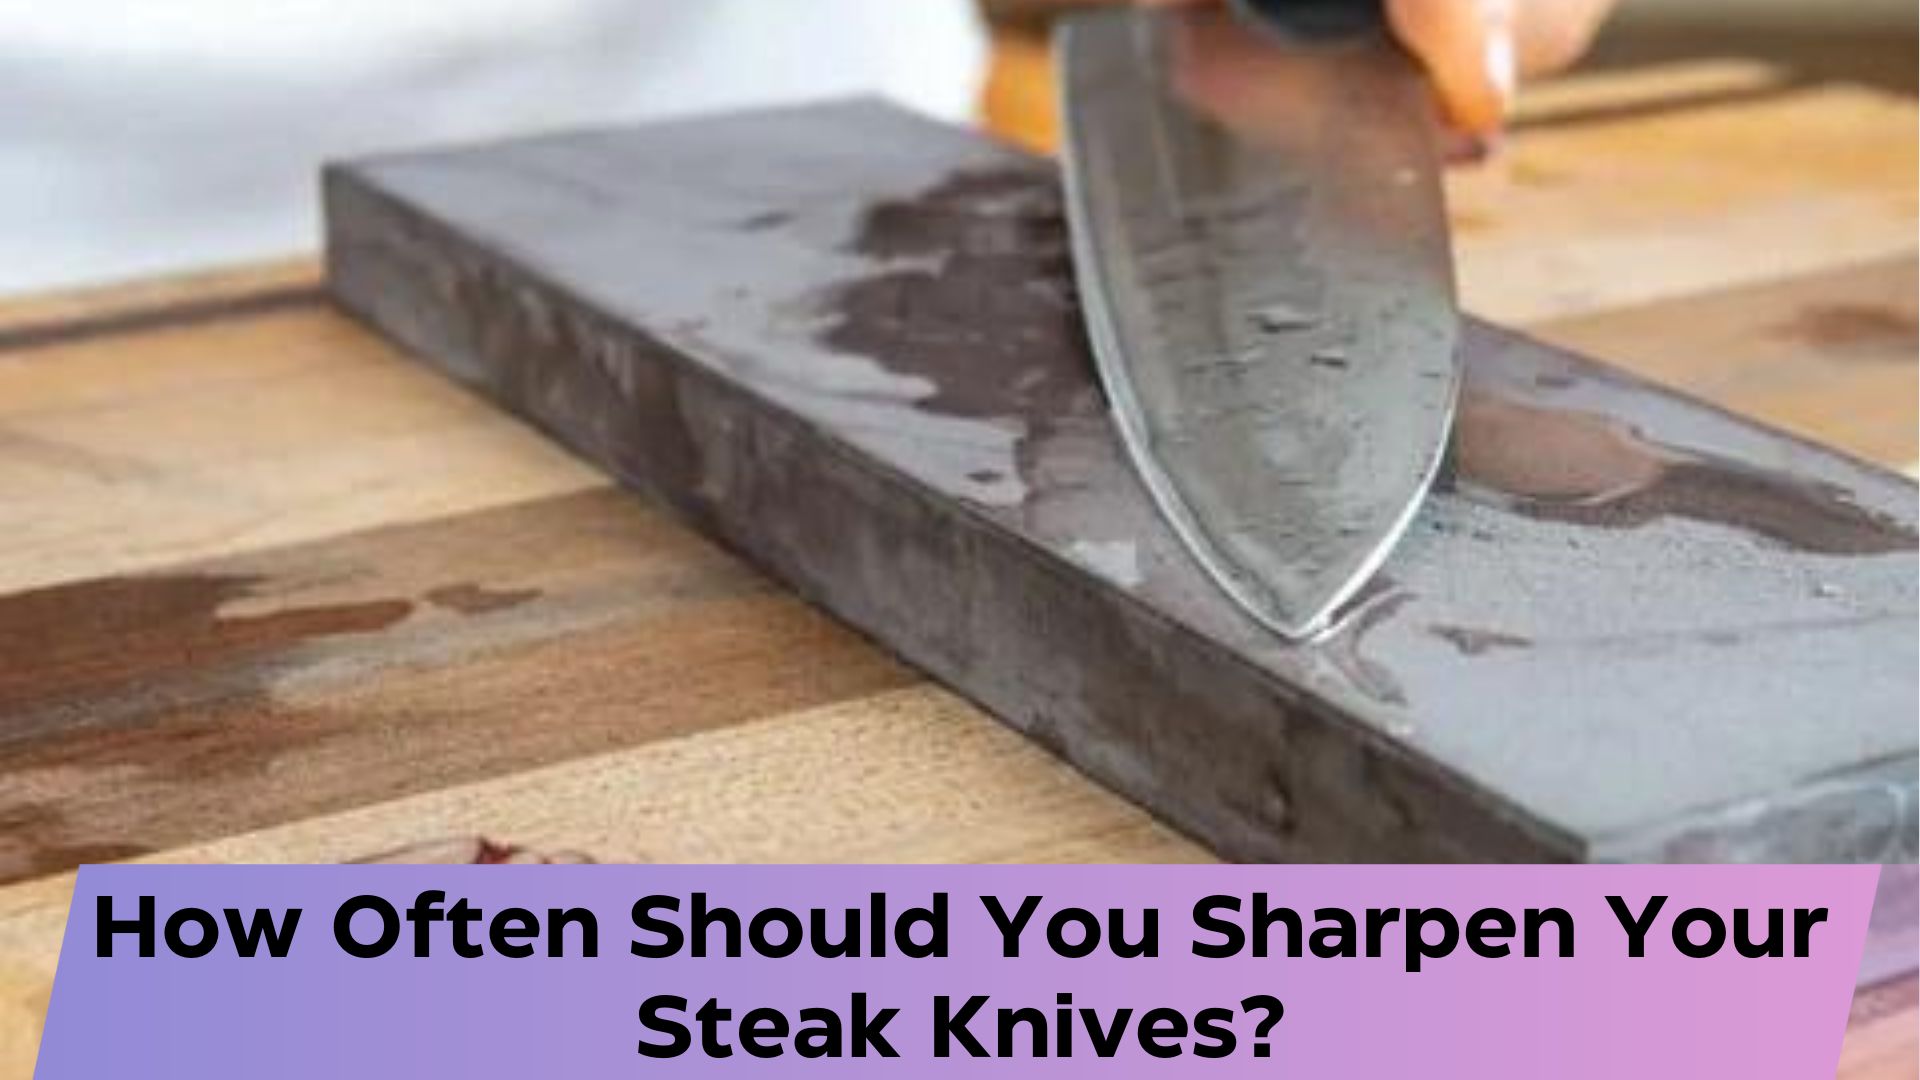 How Often Should You Sharpen Your Steak Knives?